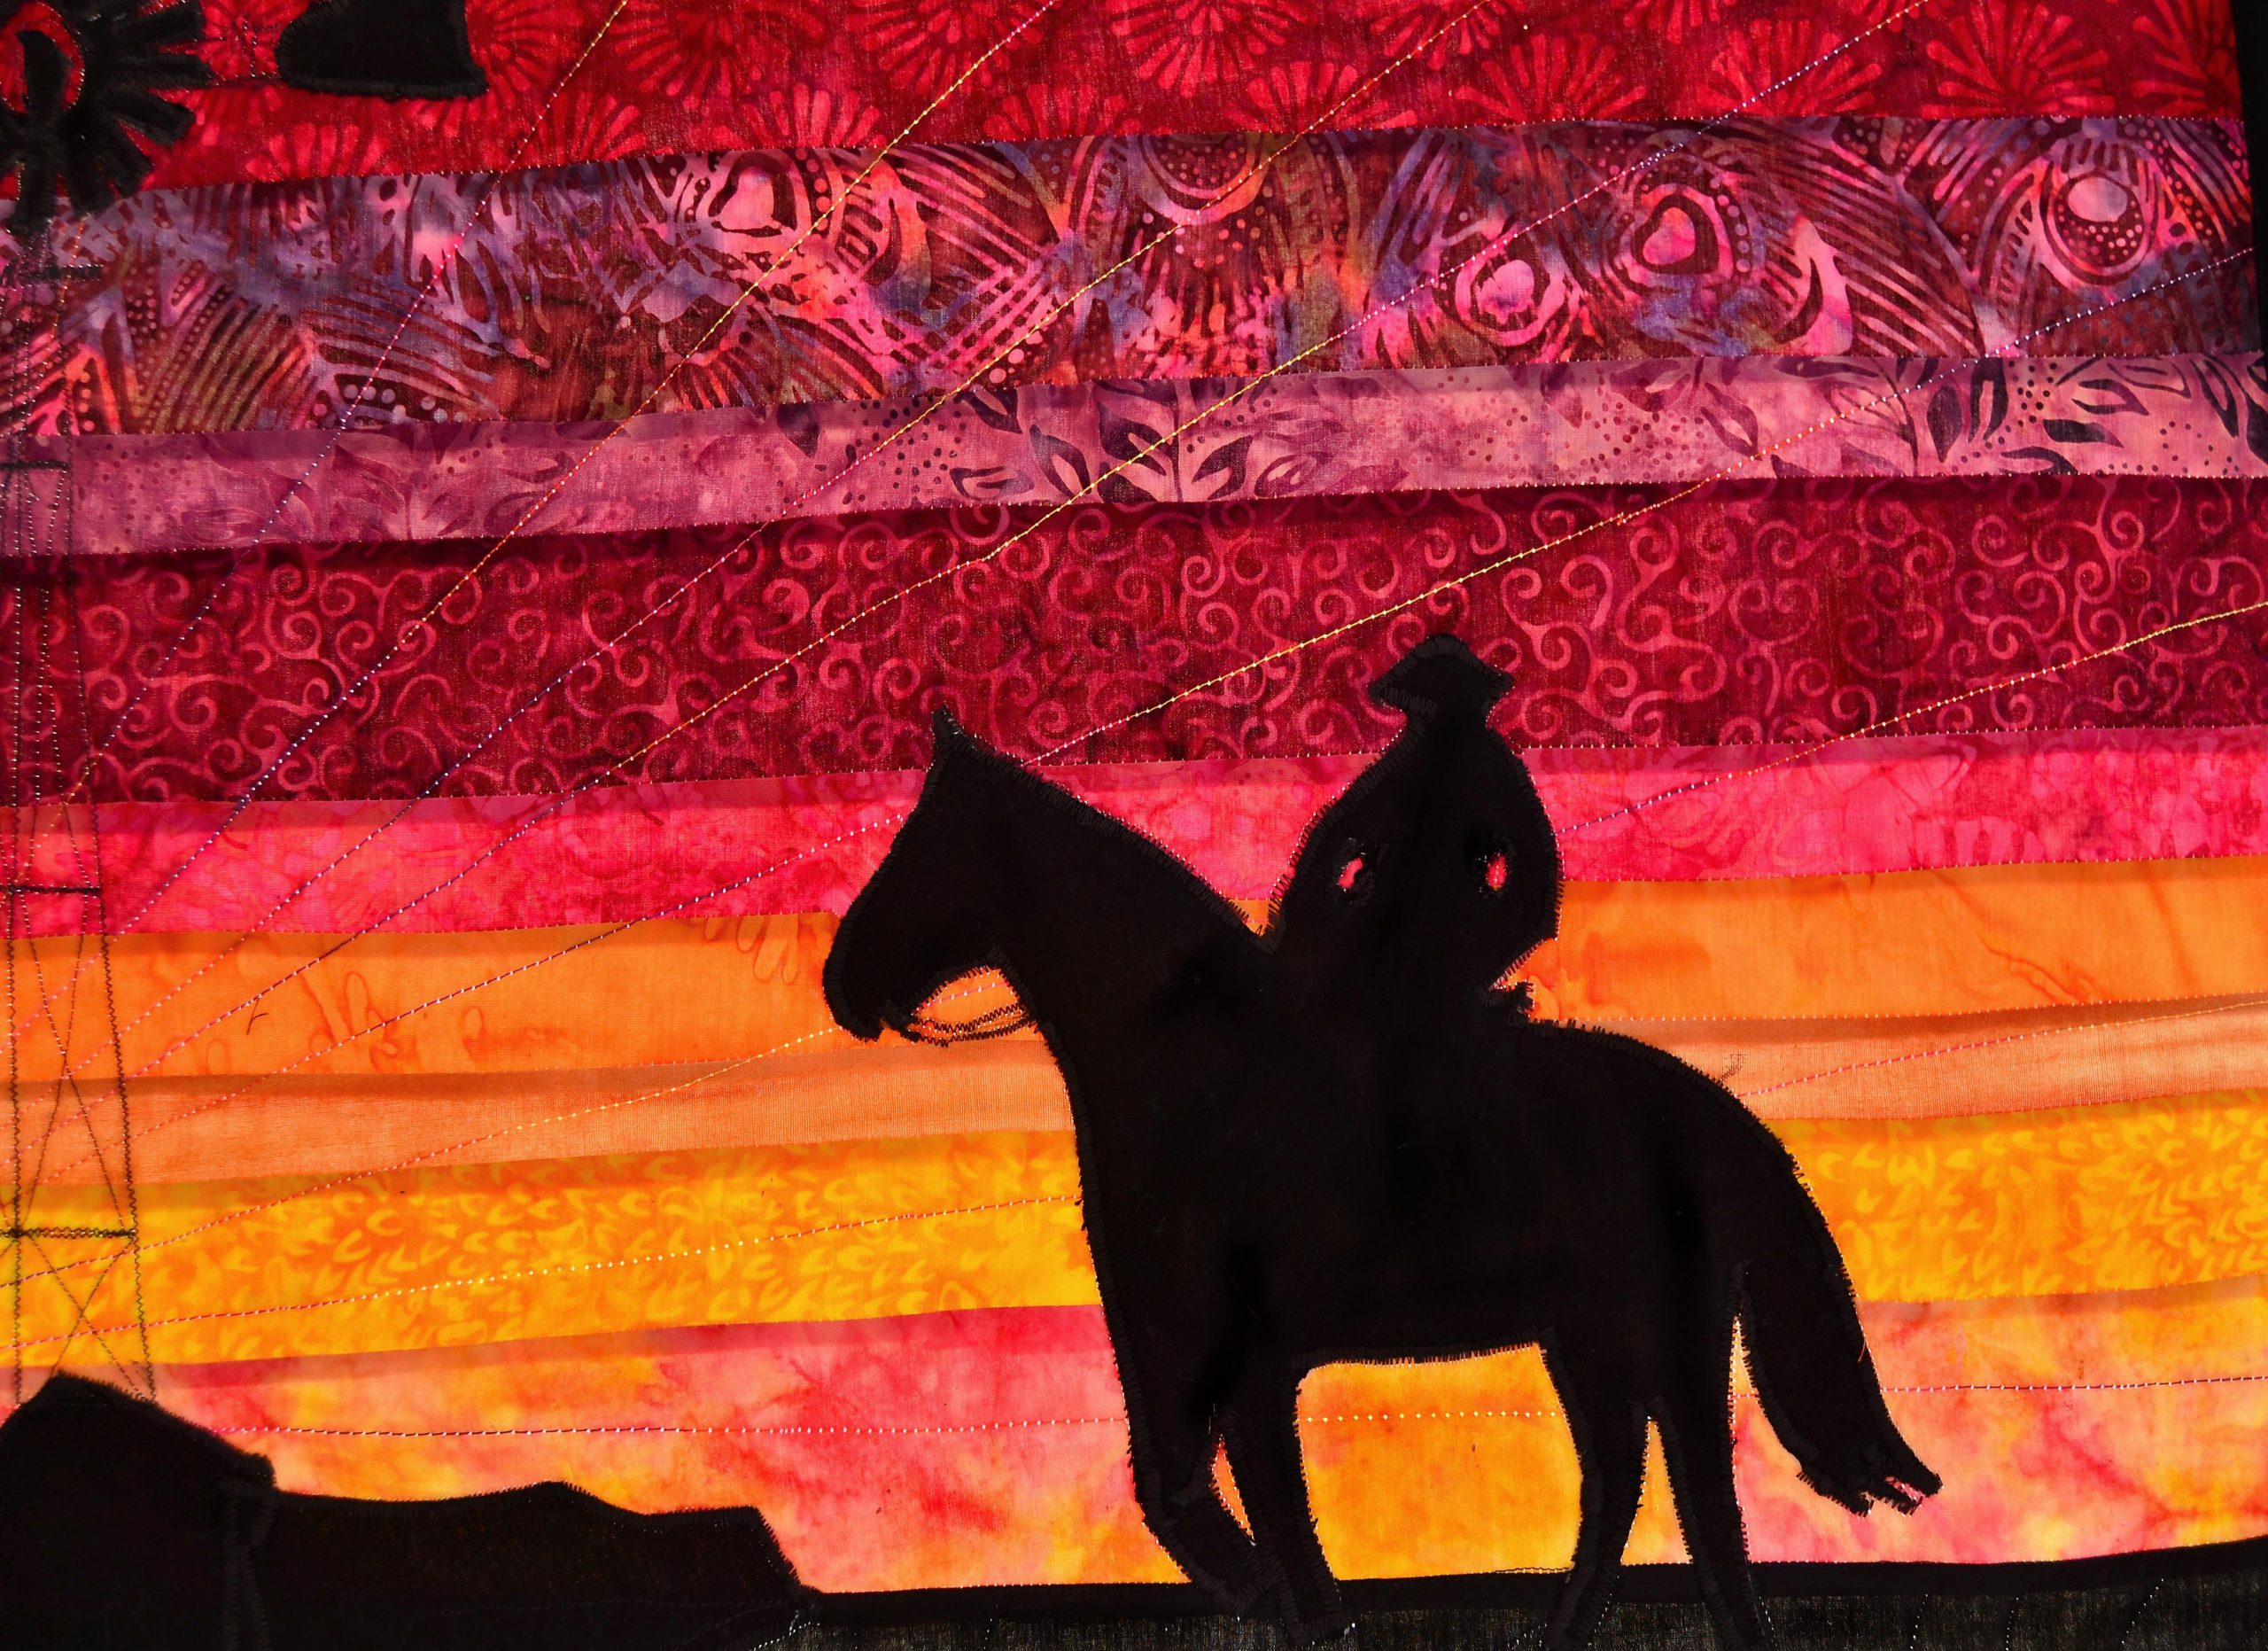 Cowboy on a horse against a sunset made of beautiful batik fabrics ranging dark pink to bright orange